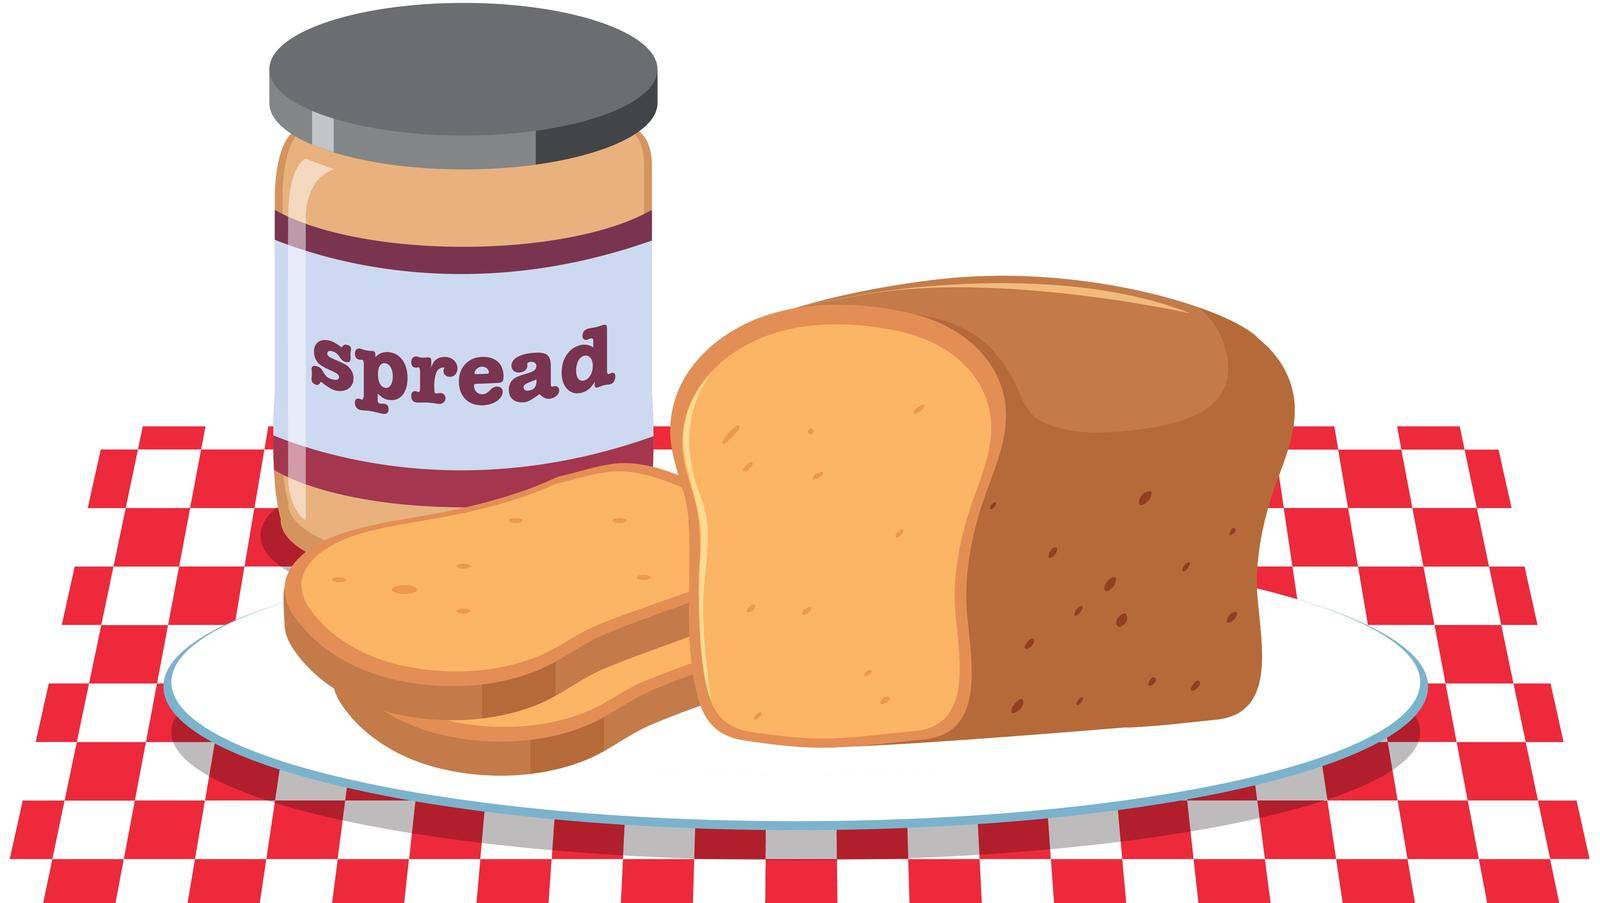 Bread and Peanut Butter Spread illustration